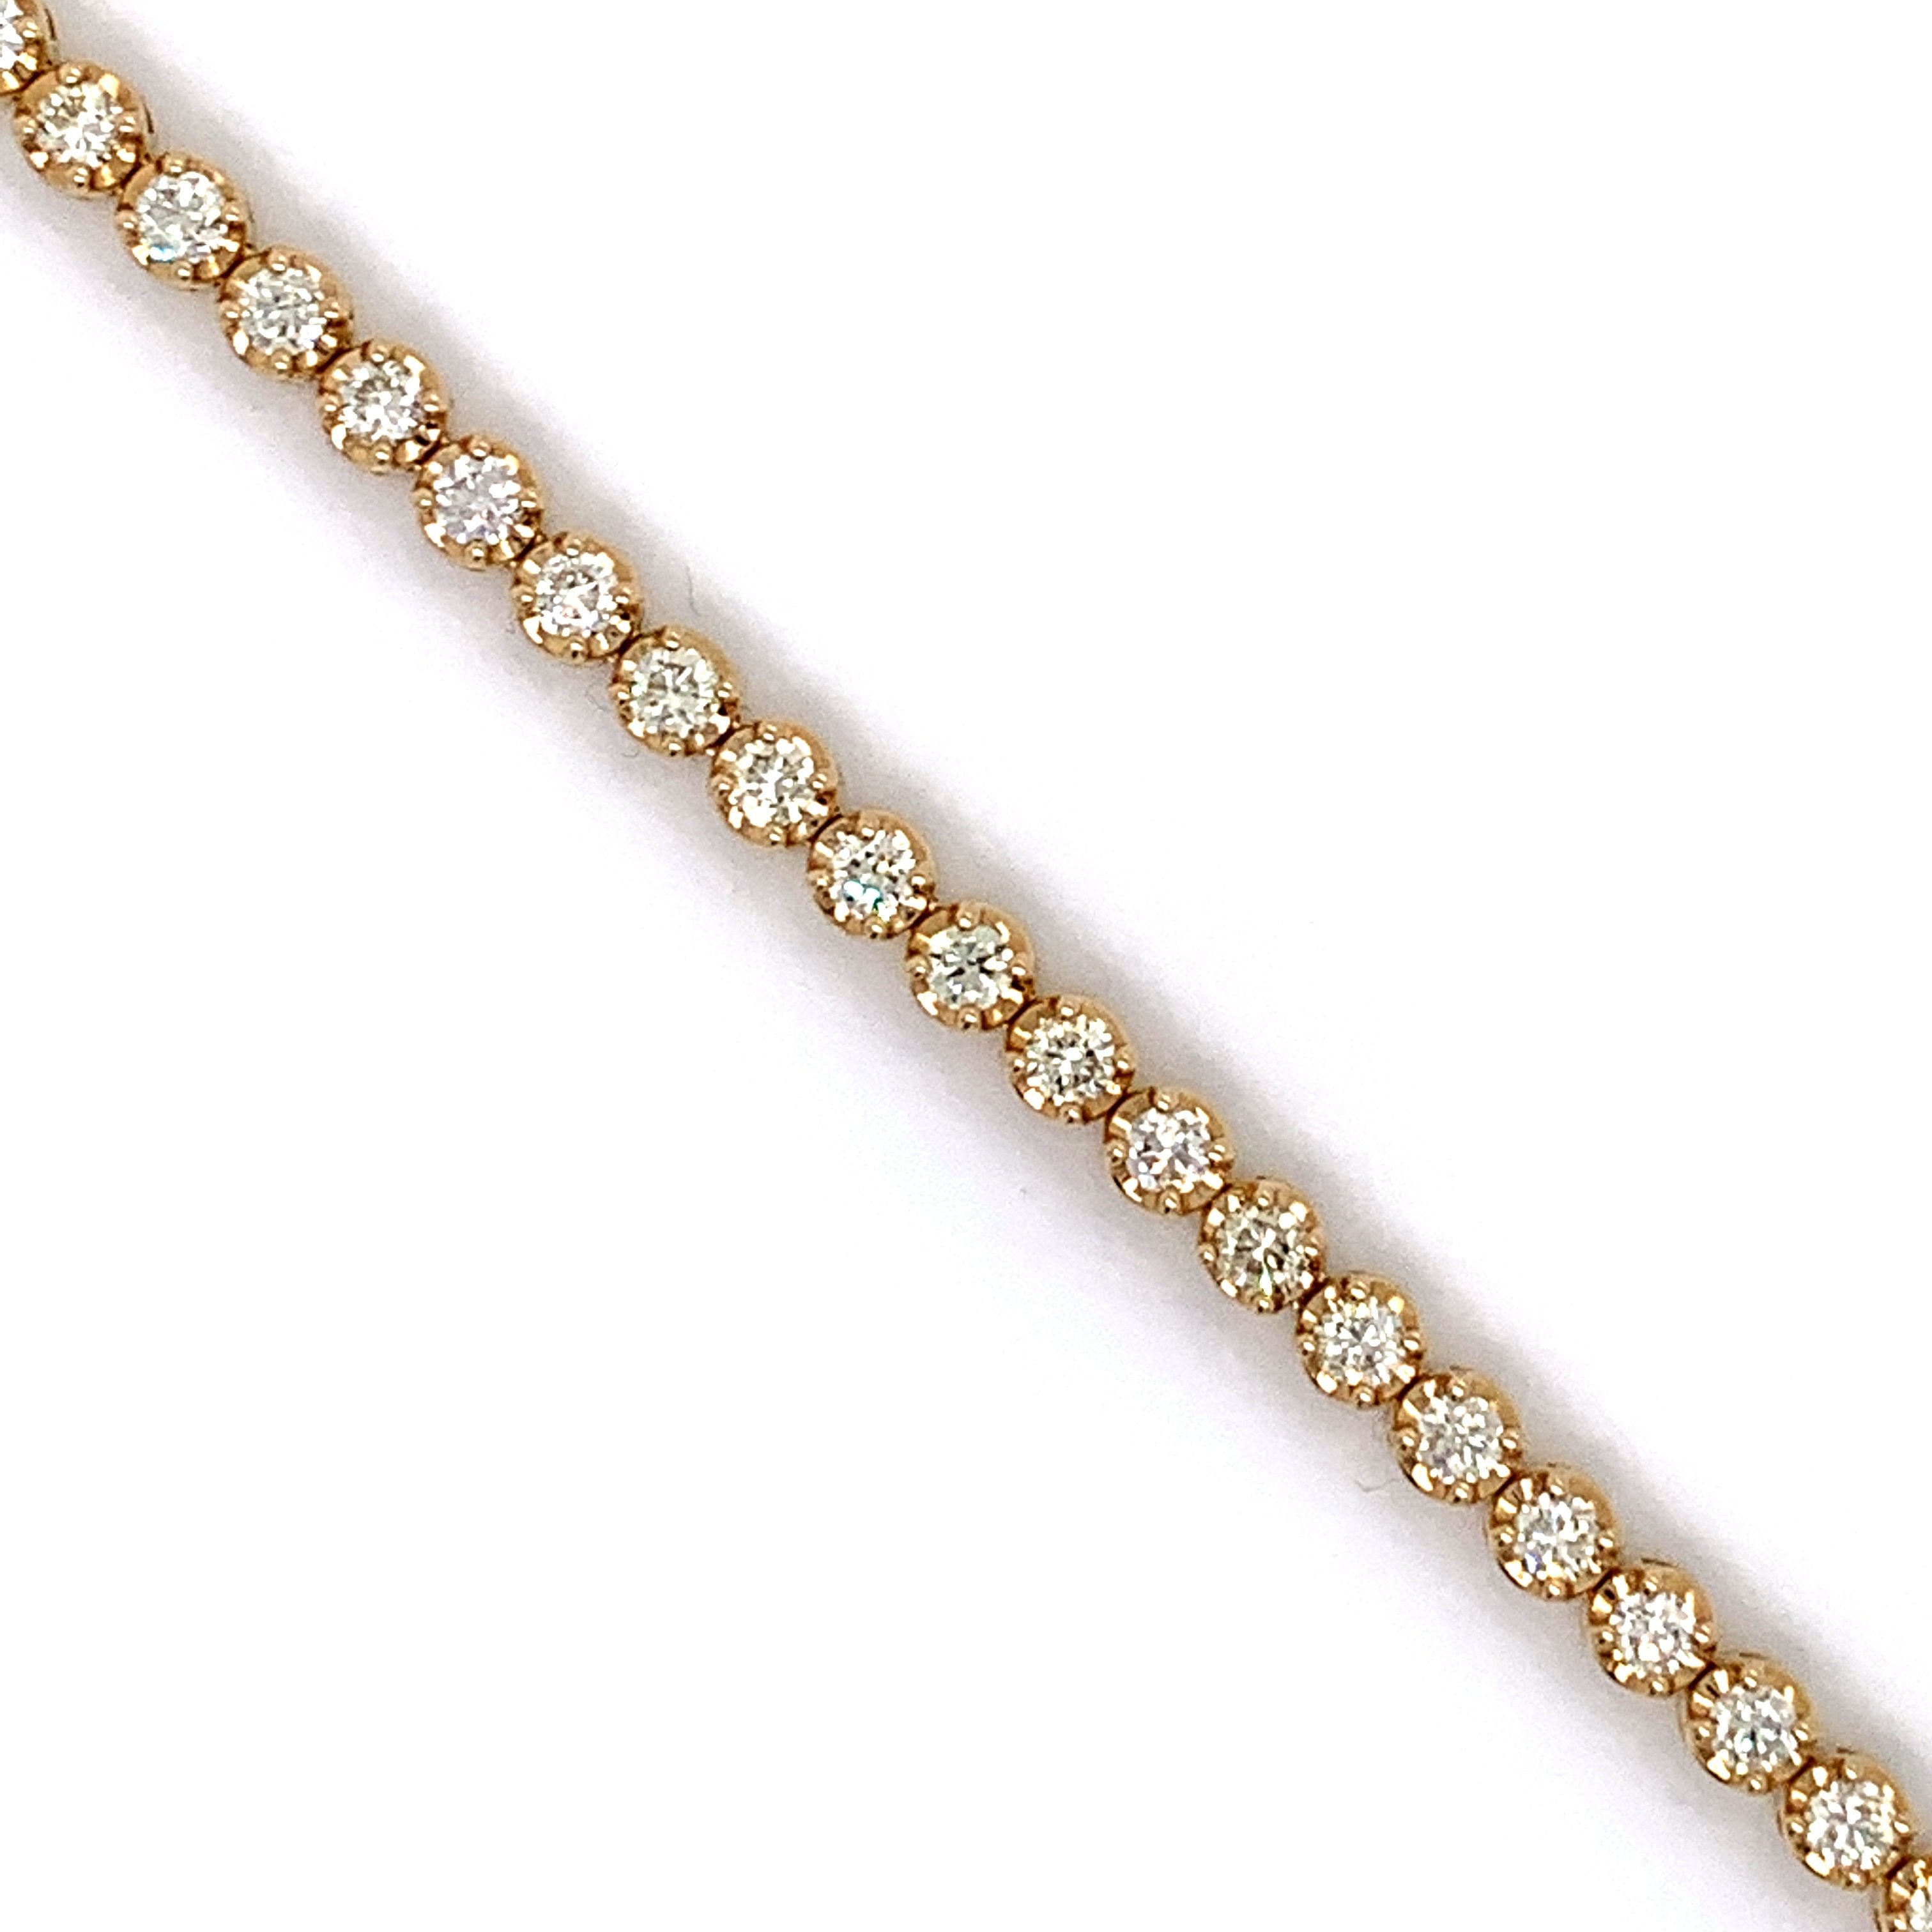 3.15CT Diamond Tennis Bracelet in 14K Gold - White Carat Diamonds 